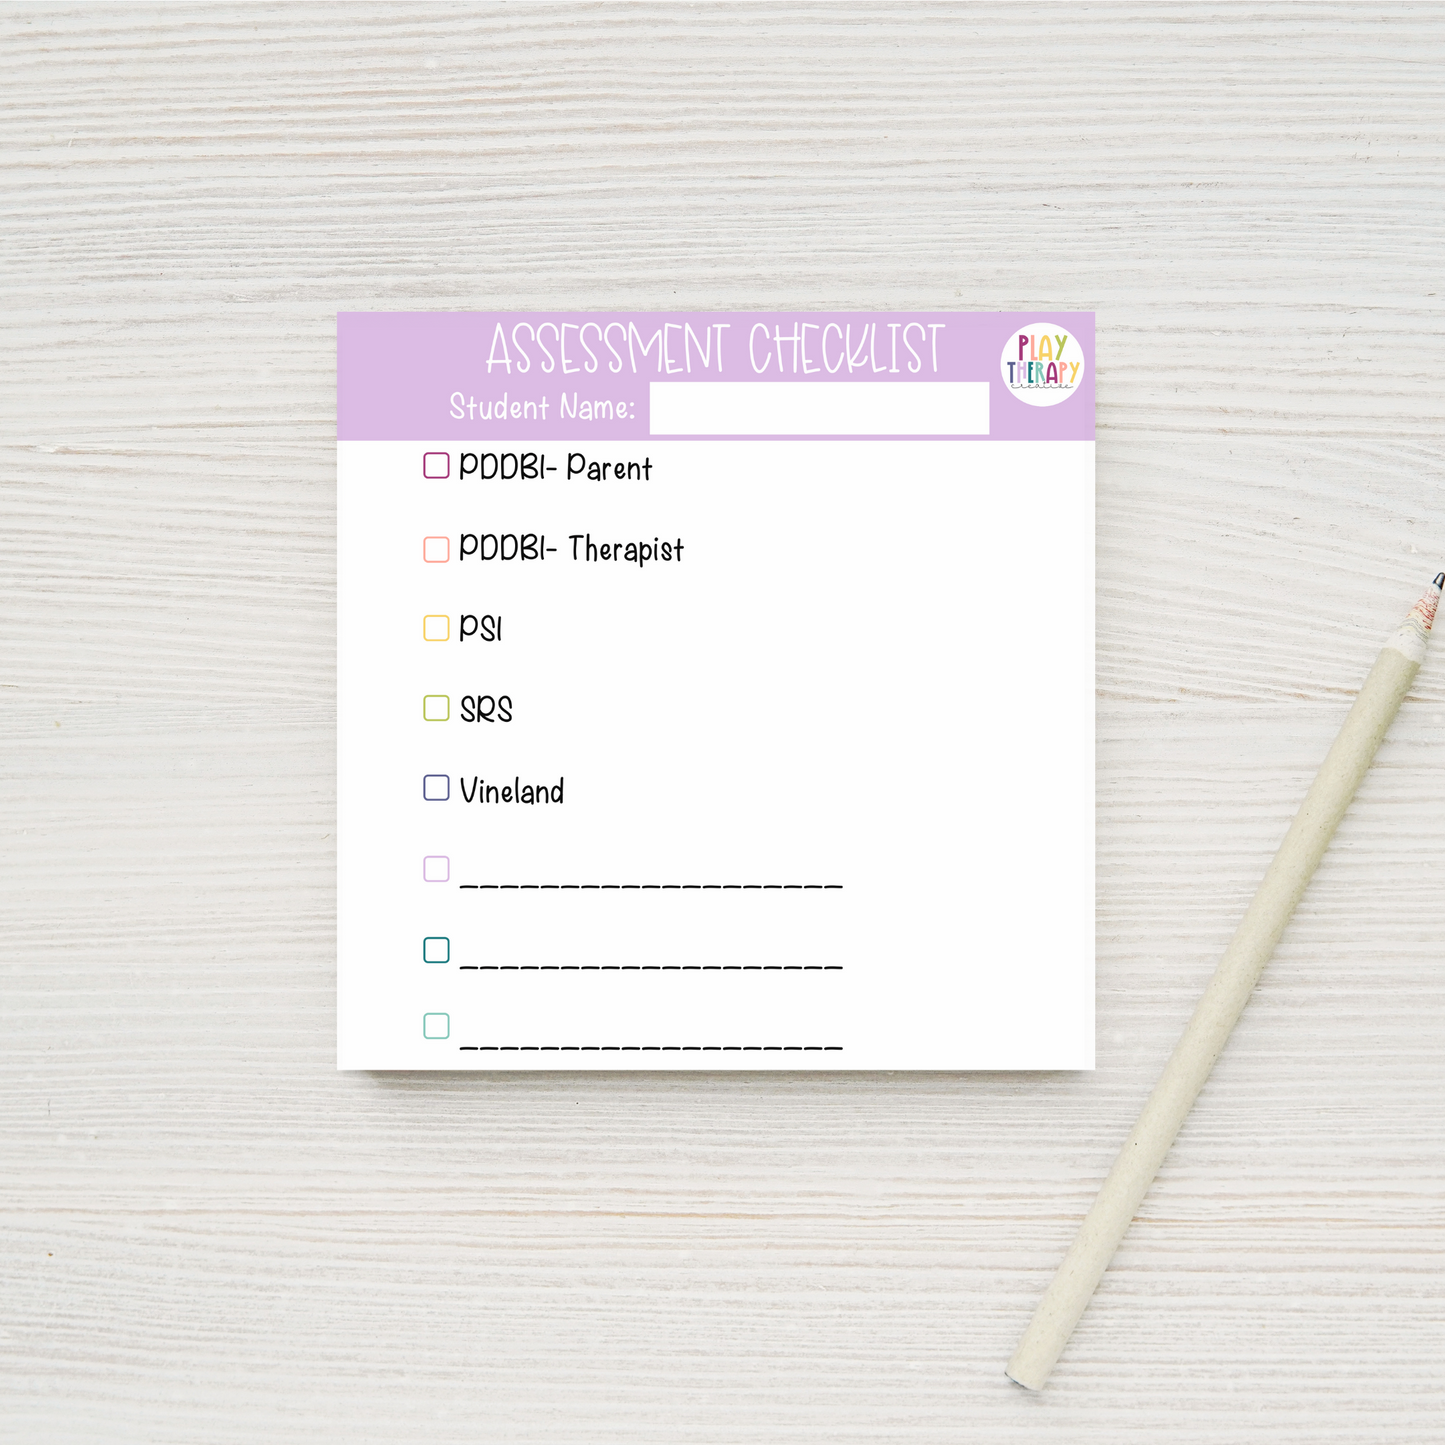 Assessment Checklist Sticky Notes (Purple)